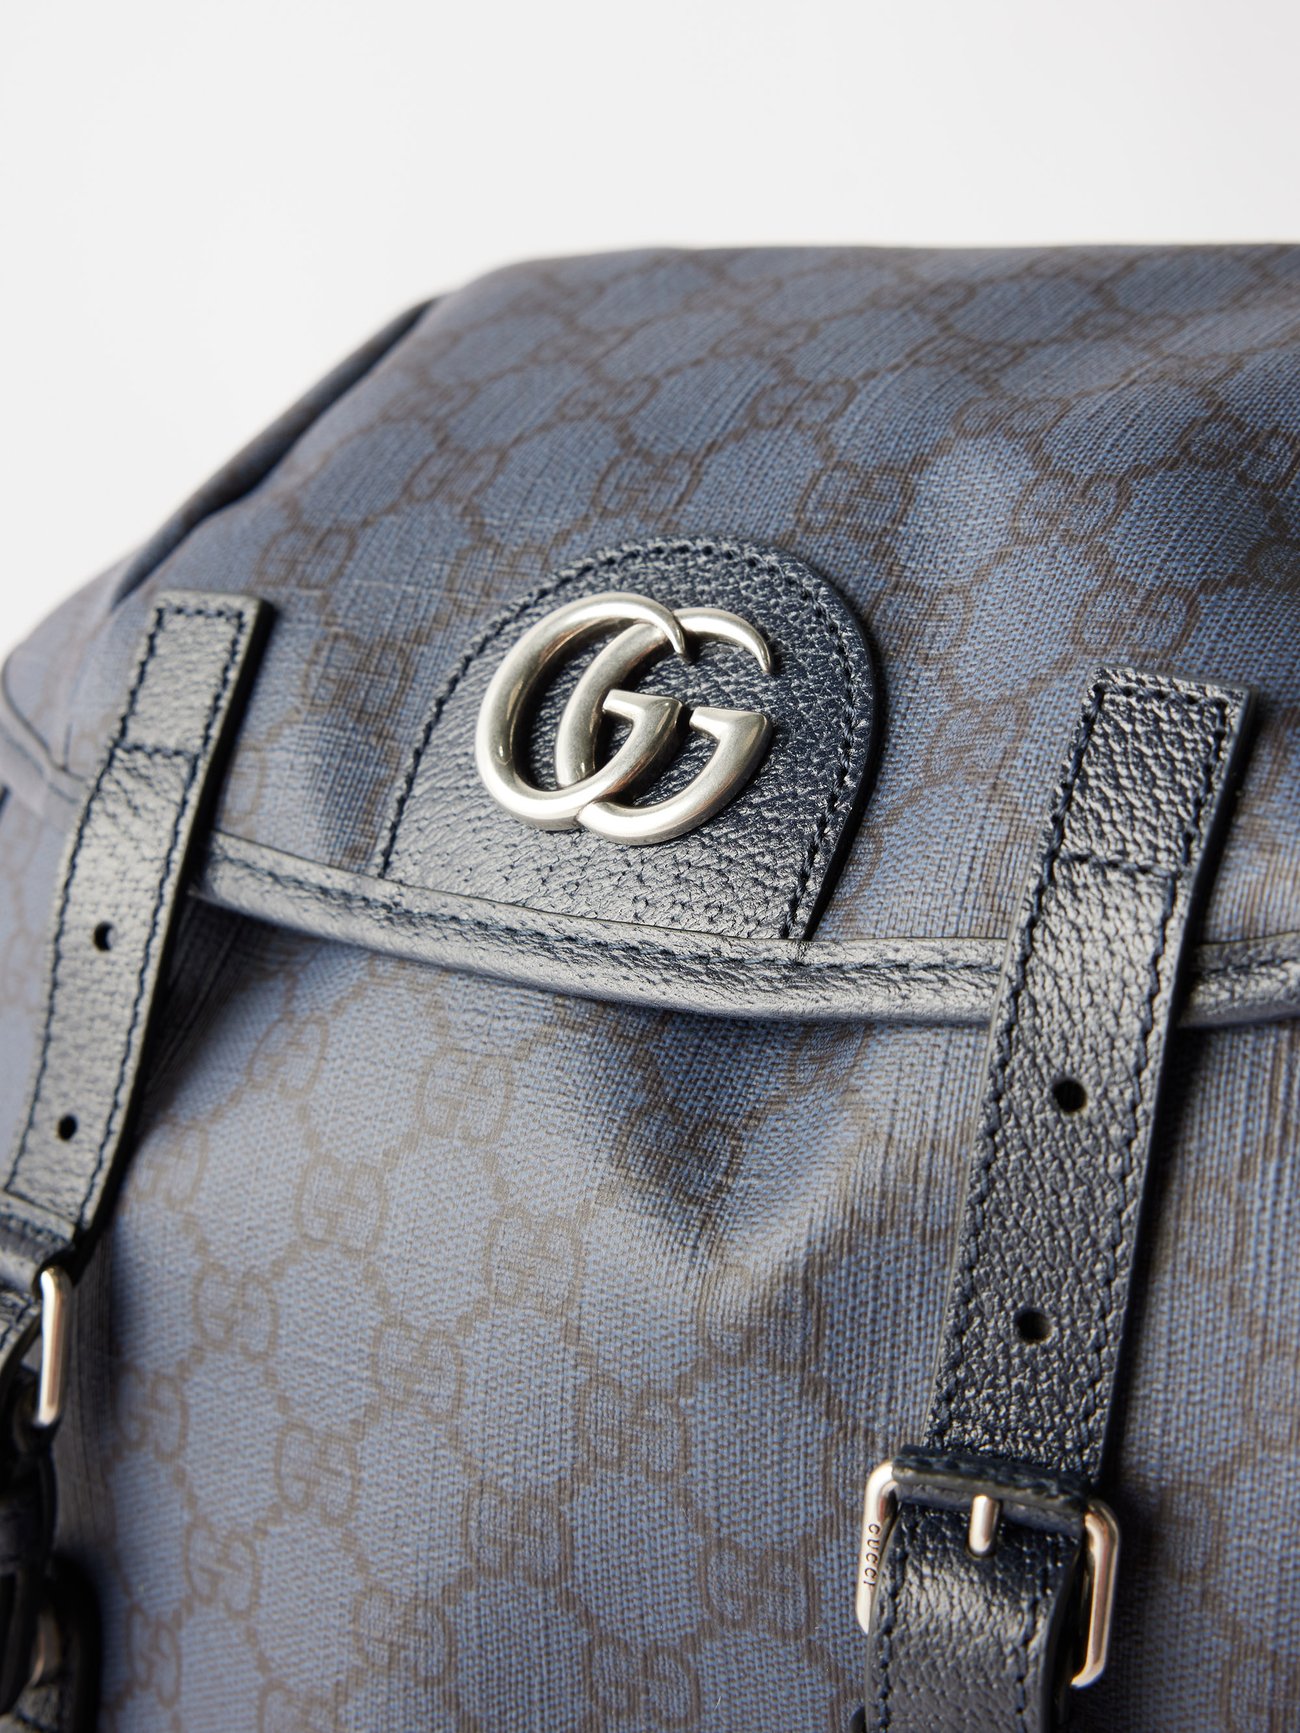 Gucci GG Supreme Leather Microfiber Backpack Bag Black